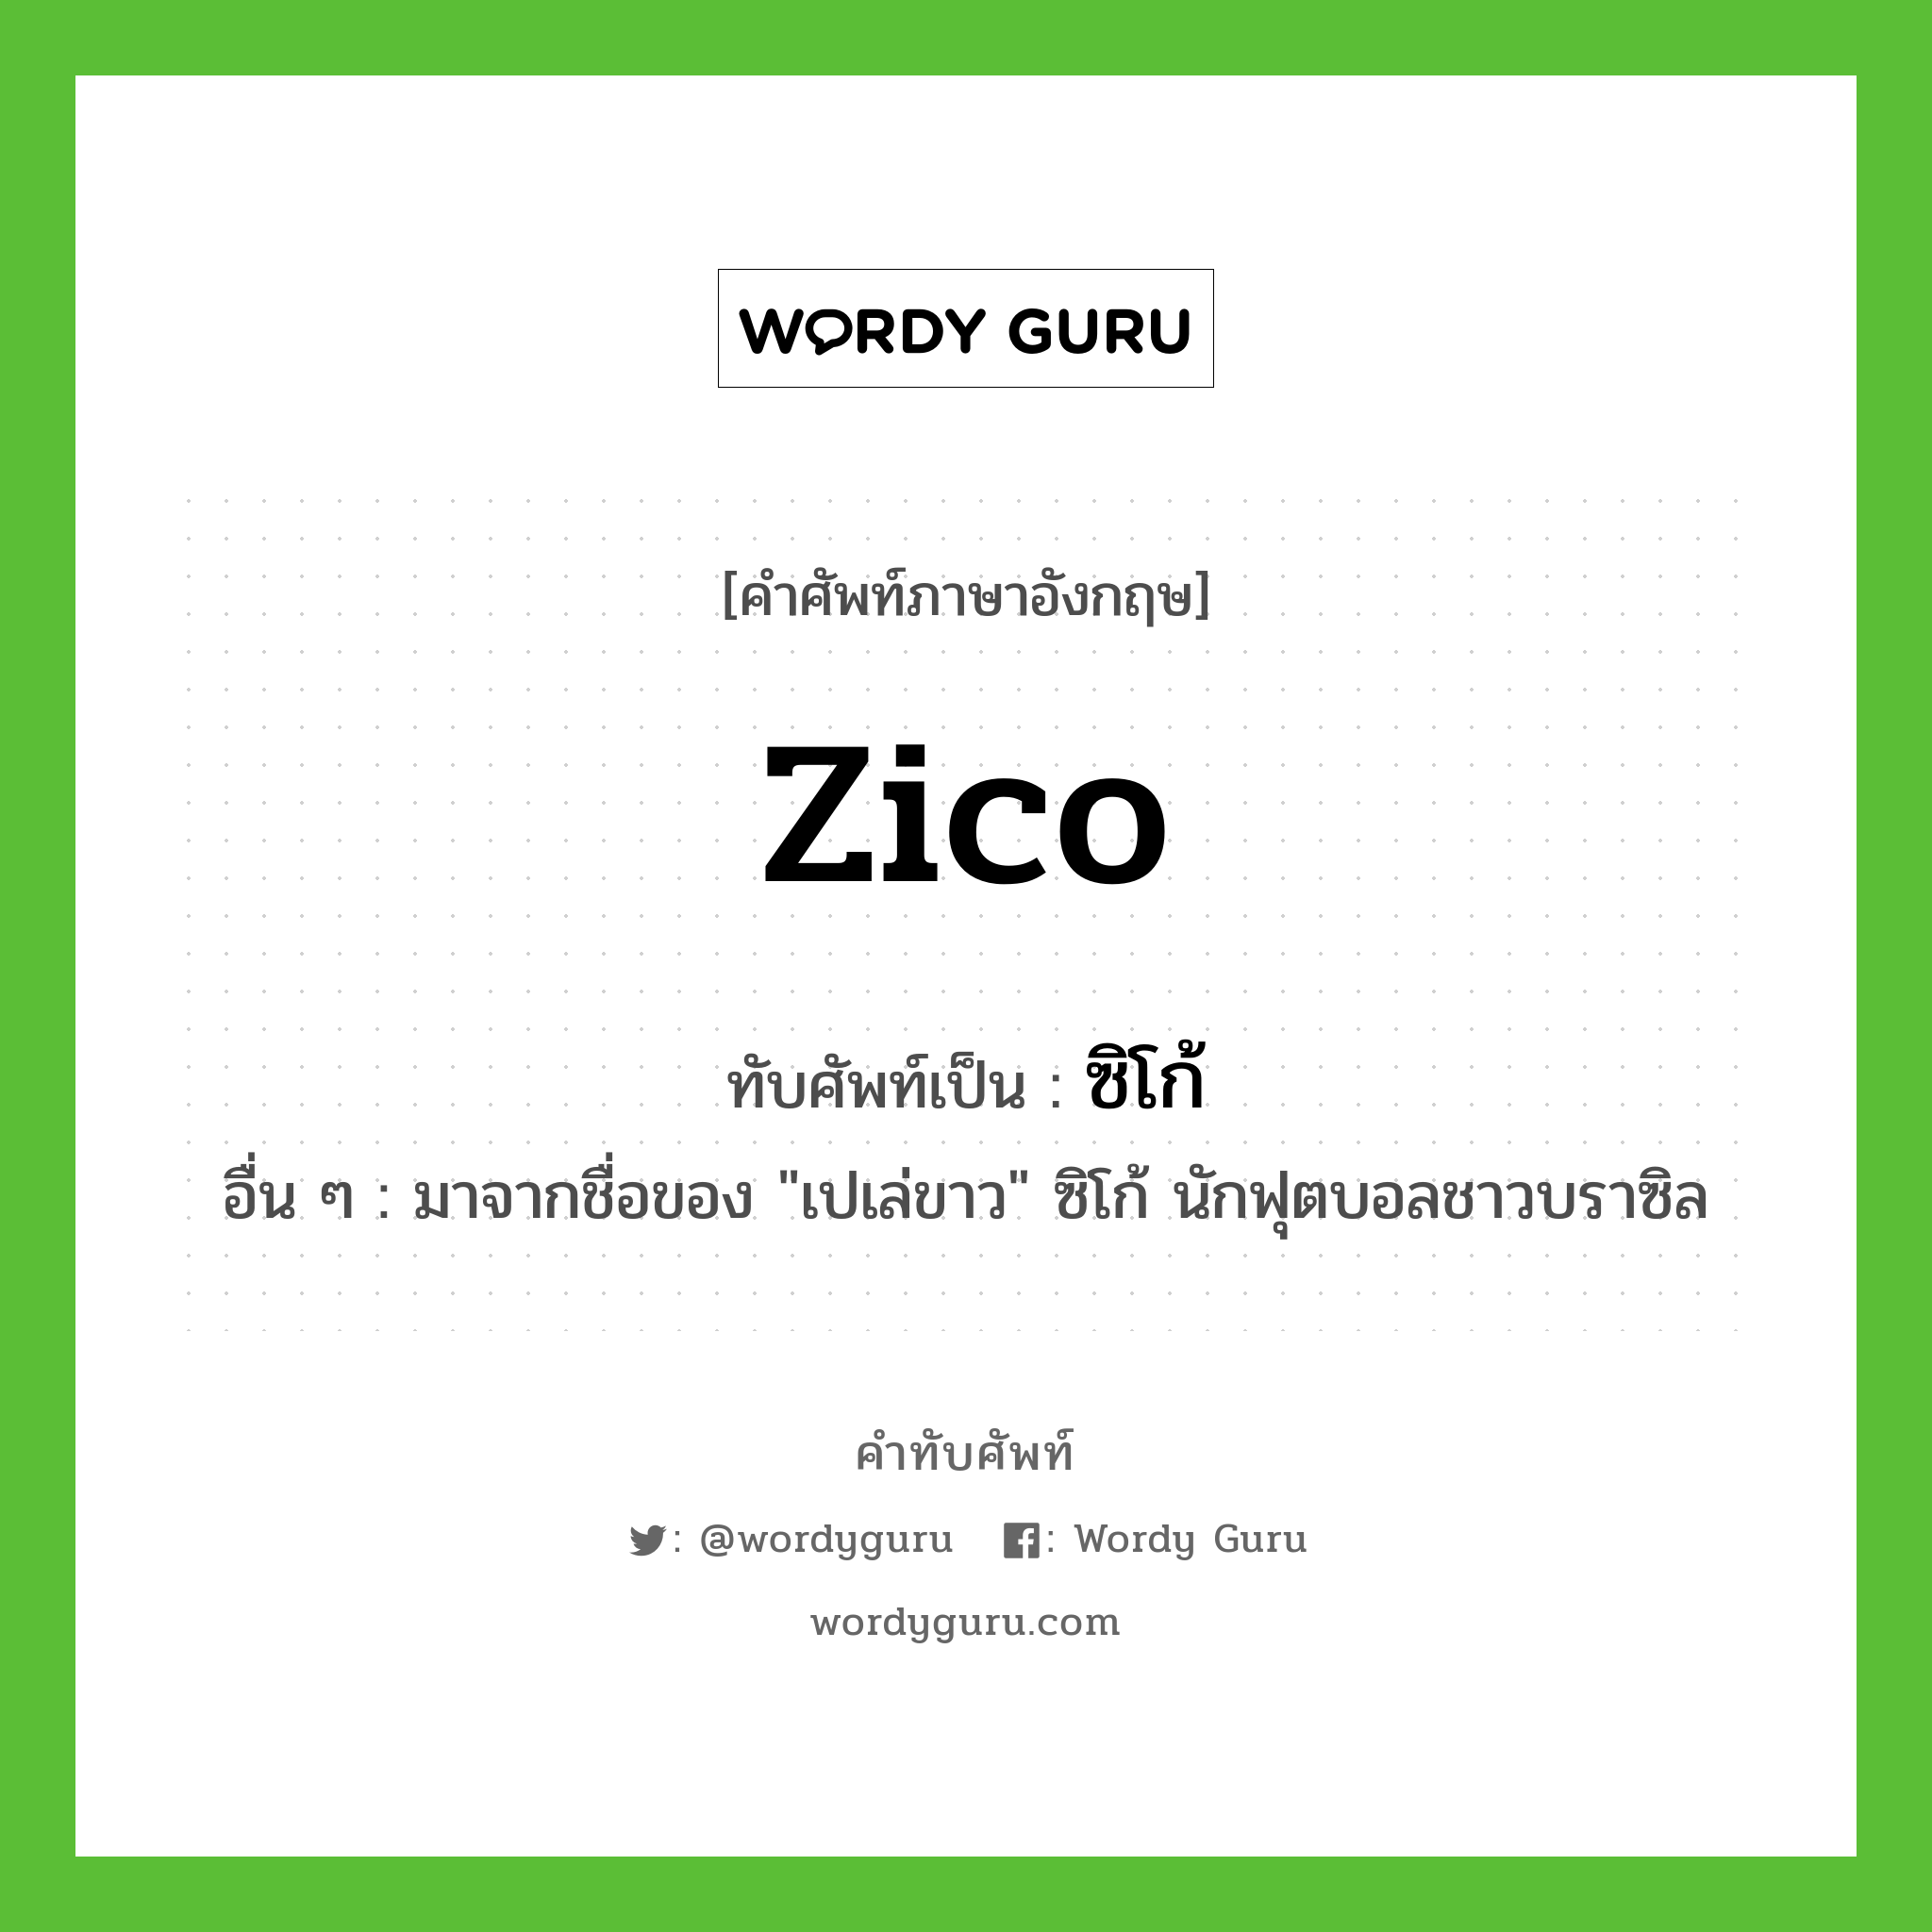 Zico เขียนเป็นคำไทยว่าอะไร?, คำศัพท์ภาษาอังกฤษ Zico ทับศัพท์เป็น ซิโก้ อื่น ๆ มาจากชื่อของ "เปเล่ขาว" ซิโก้ นักฟุตบอลชาวบราซิล